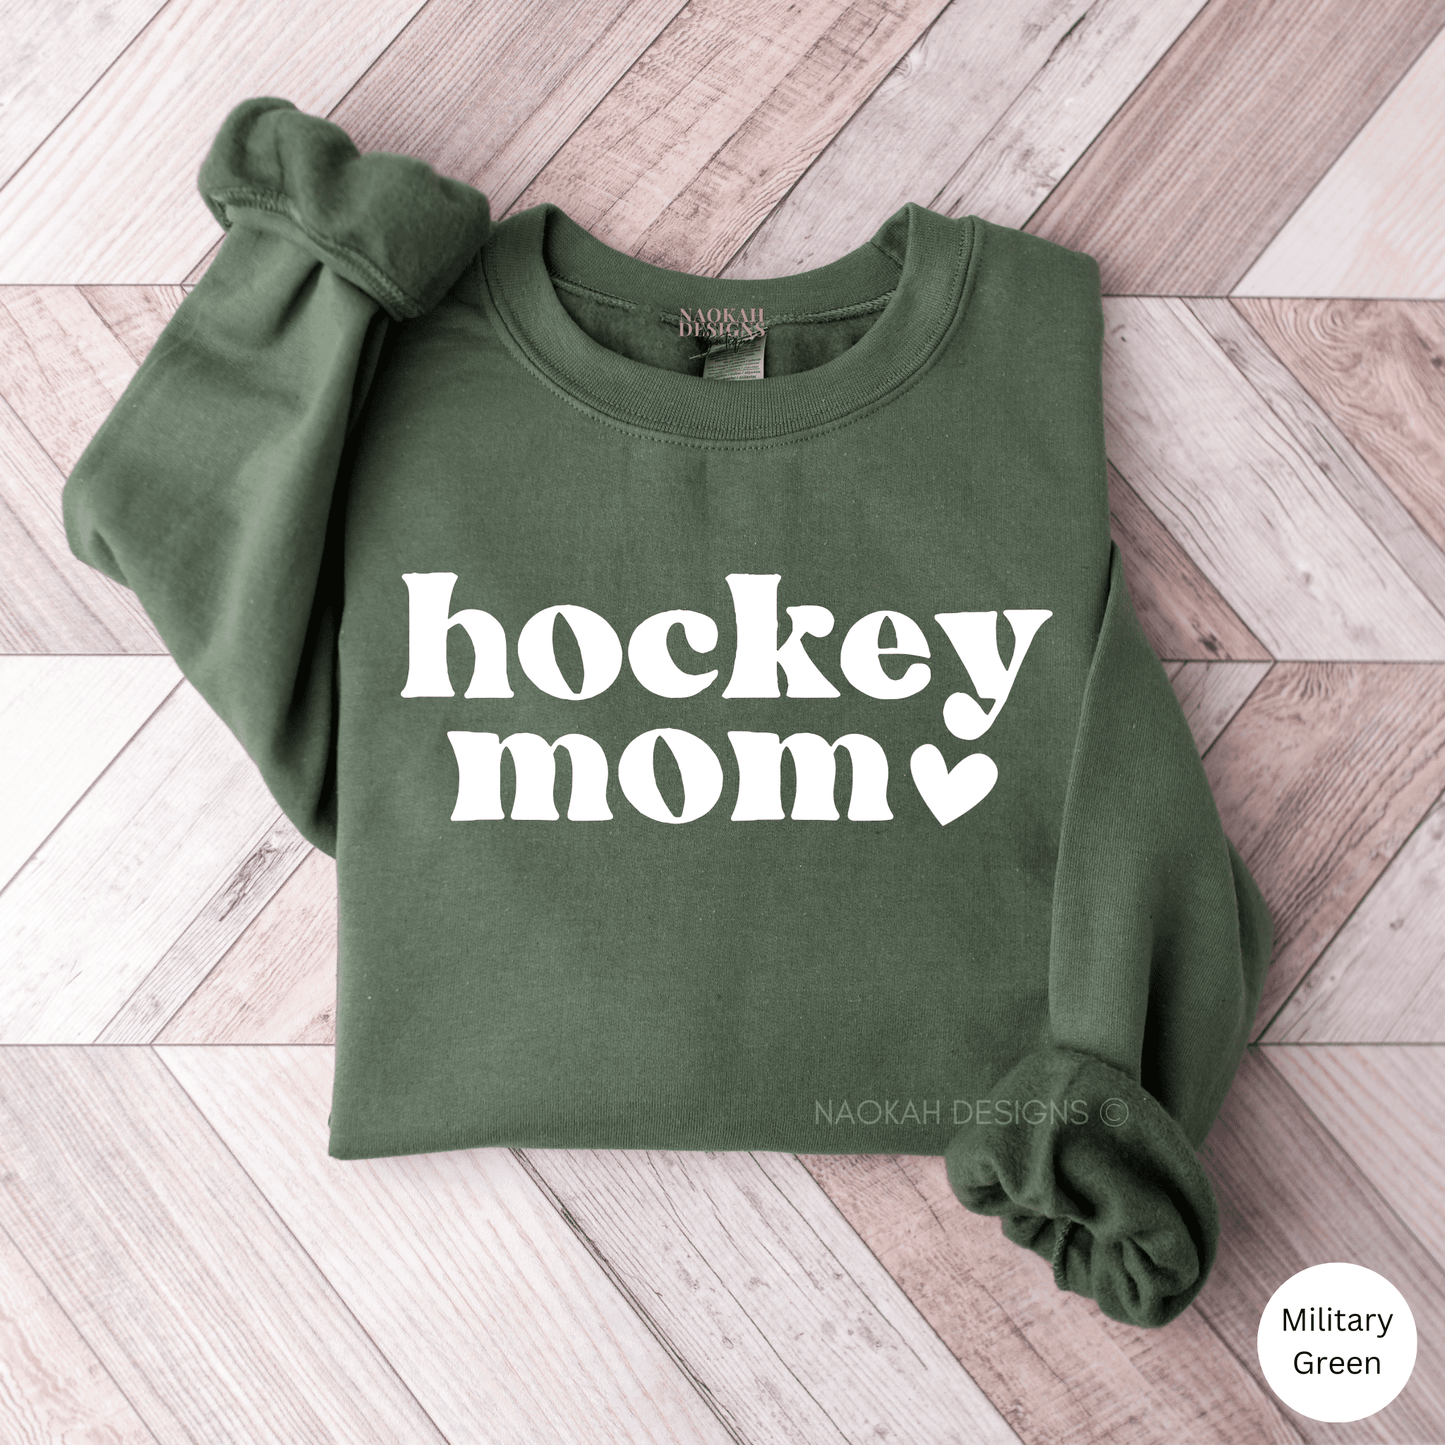 hockey mom crewneck sweater, livin' that hockey mom life sweater, hockey mom sweater, hockey mom hat, hockey sweatshirt, hockey mom gift, hockey mom shirt